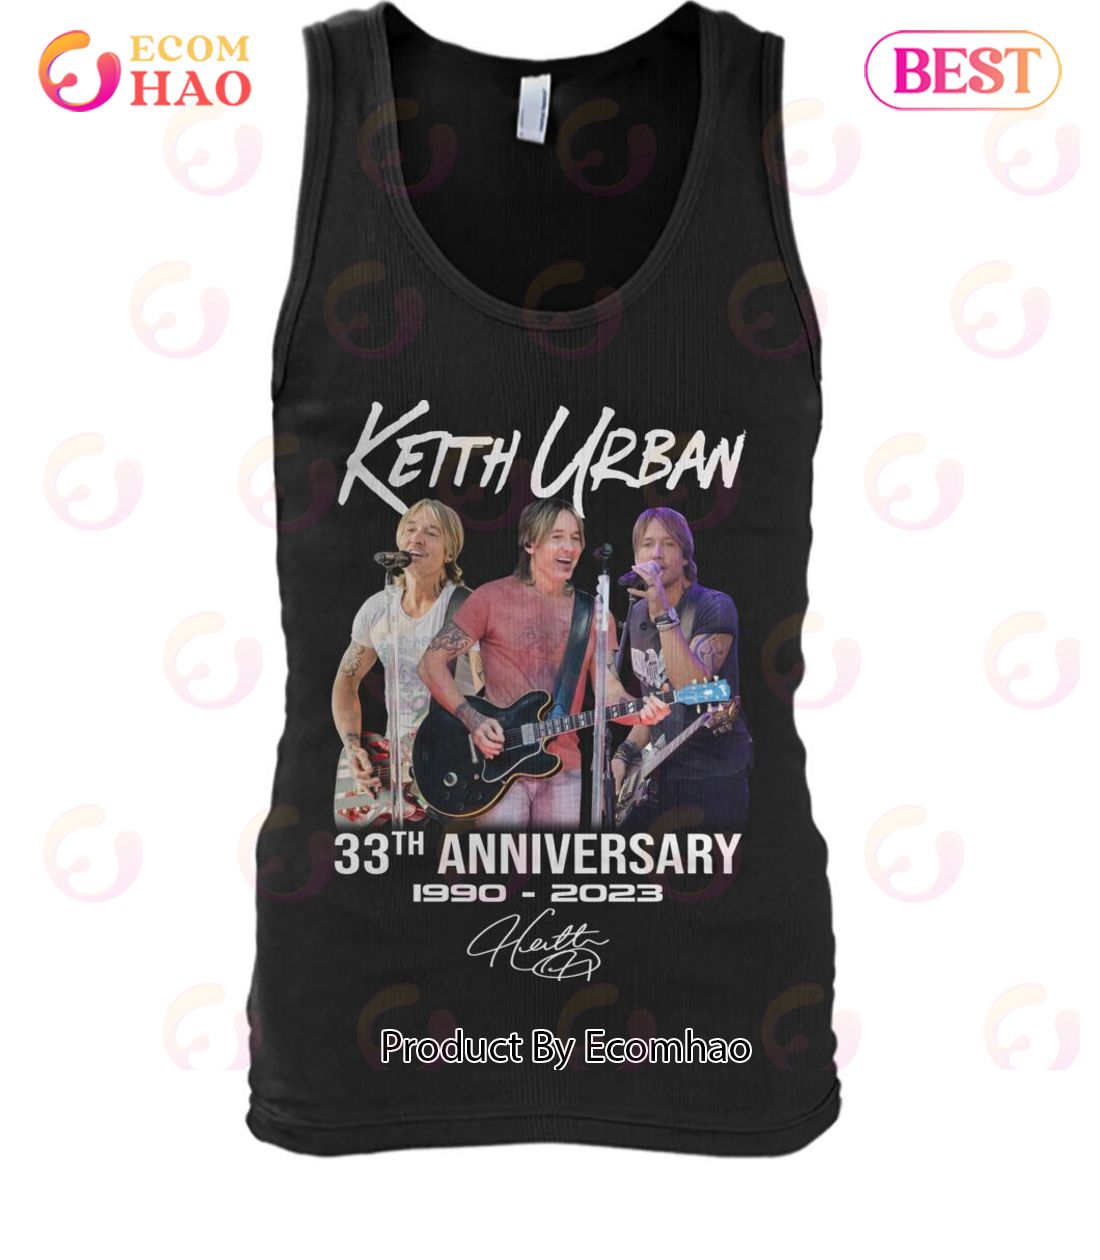 Keith Urban 33th Anniversary 1990 - 2023 Signature T-Shirt